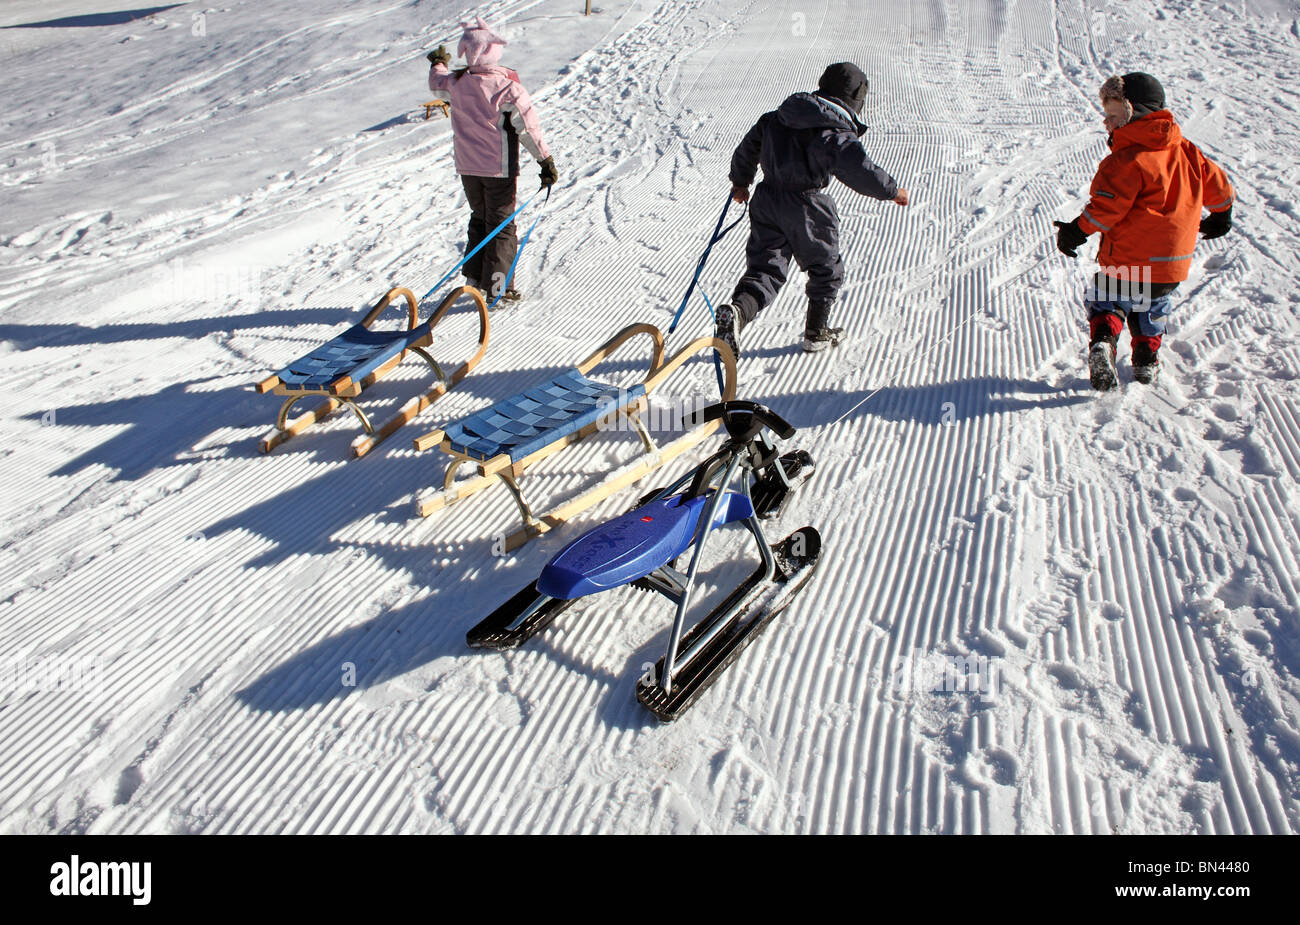 Children pulling sleds on the snow, Jerzens, Austria Stock Photo